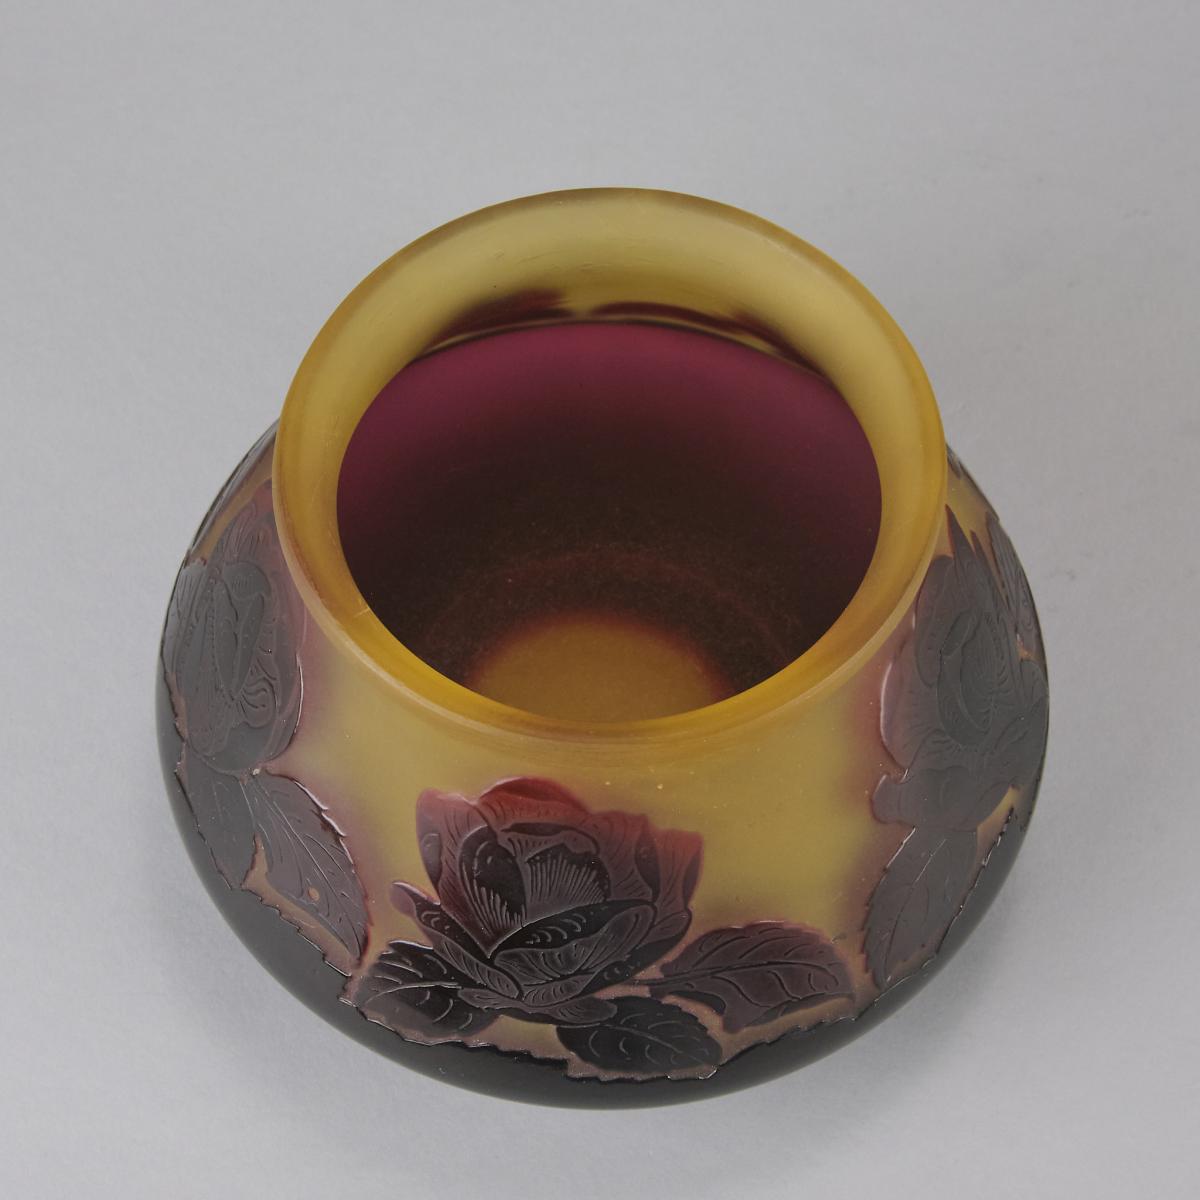 Cameo glass bowel entitled "Floral Bowl" by Paul Nicolas - Circa 1920